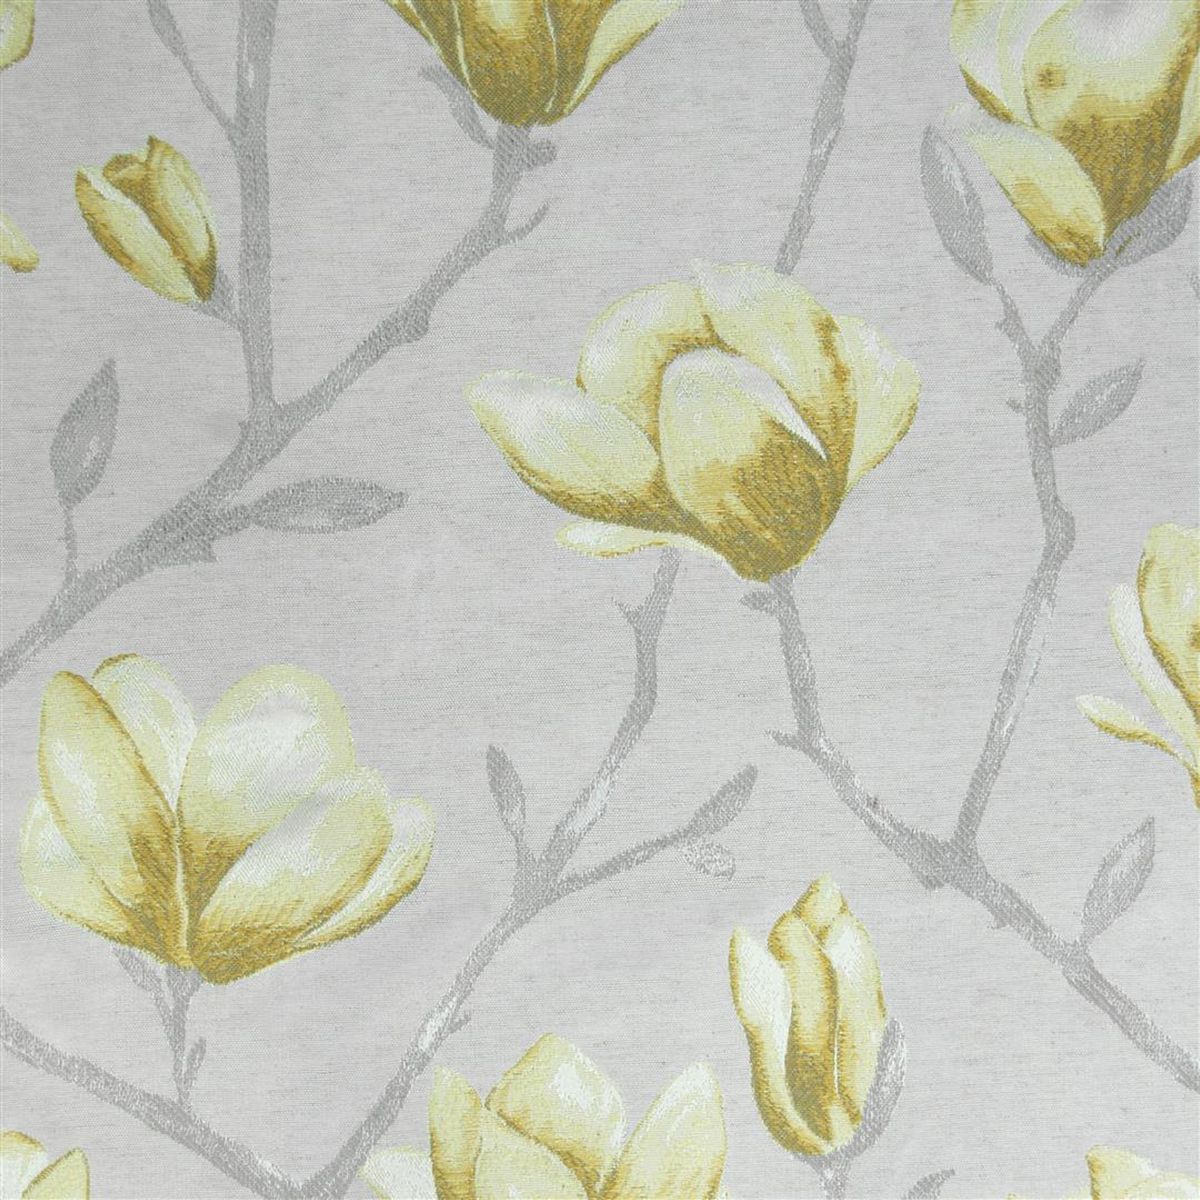 Chatsworth Daffodil Fabric by Voyage Maison